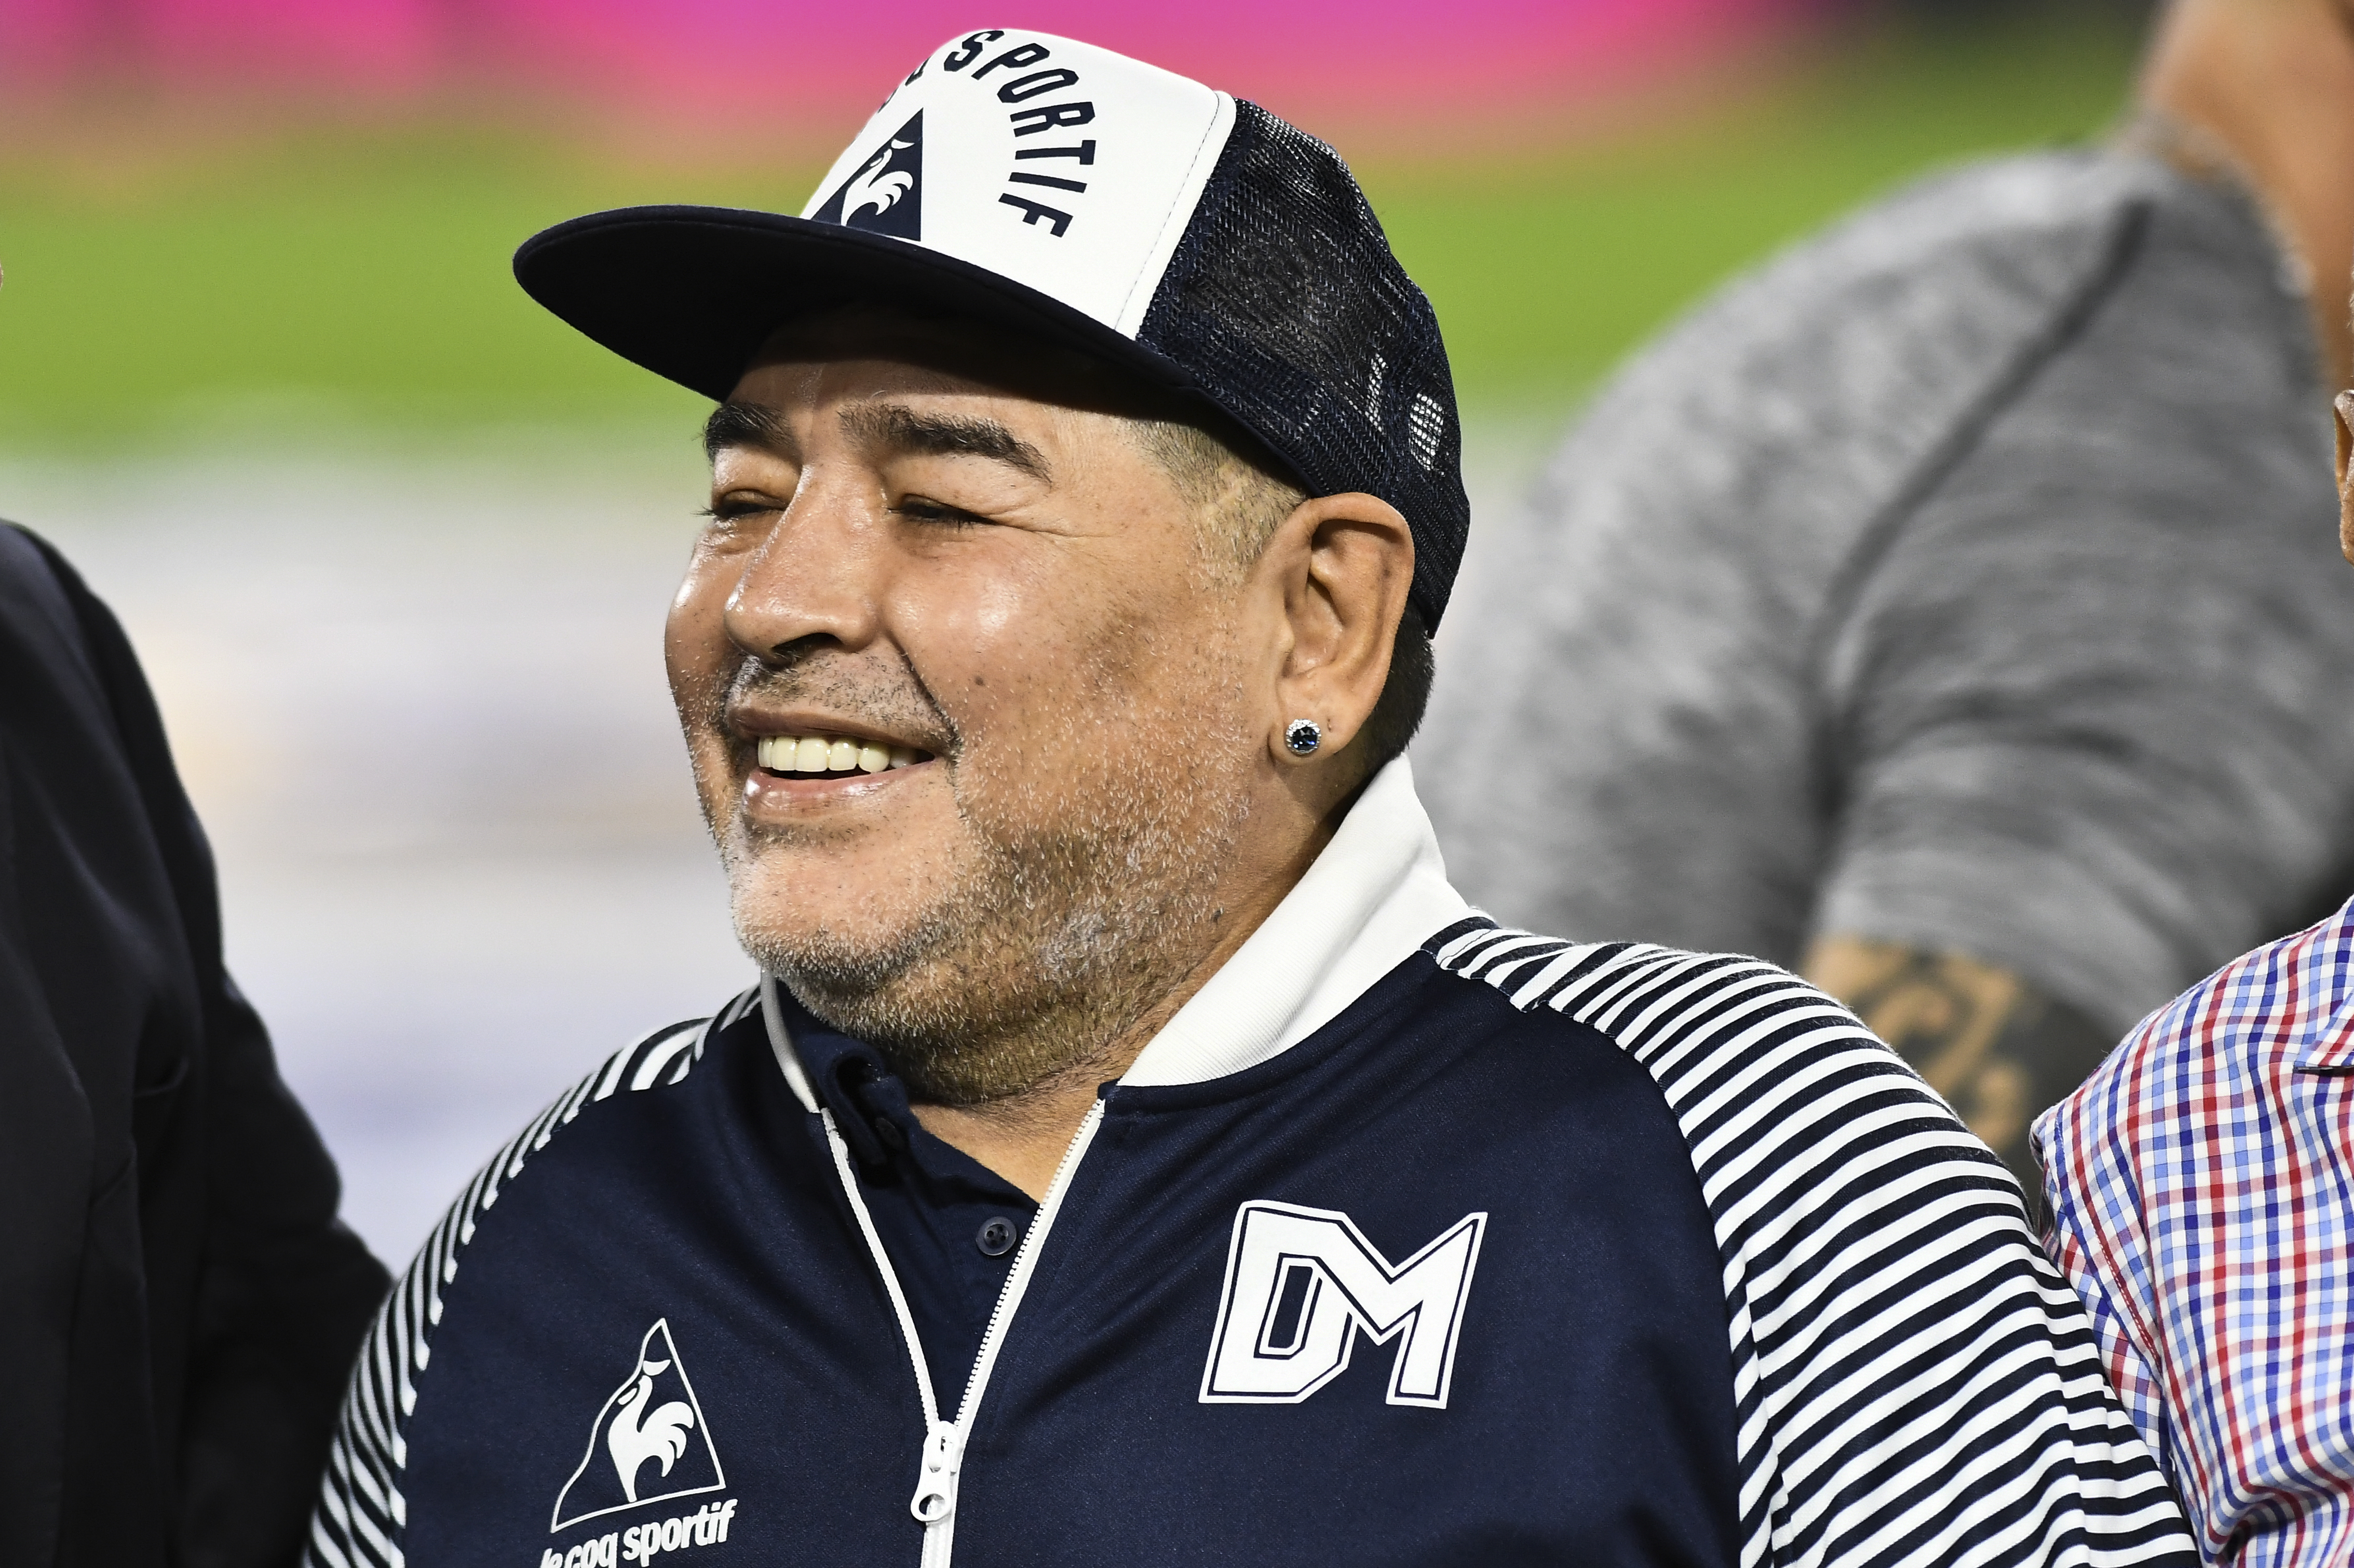 Morre Diego Maradona aos 60 anos de idade